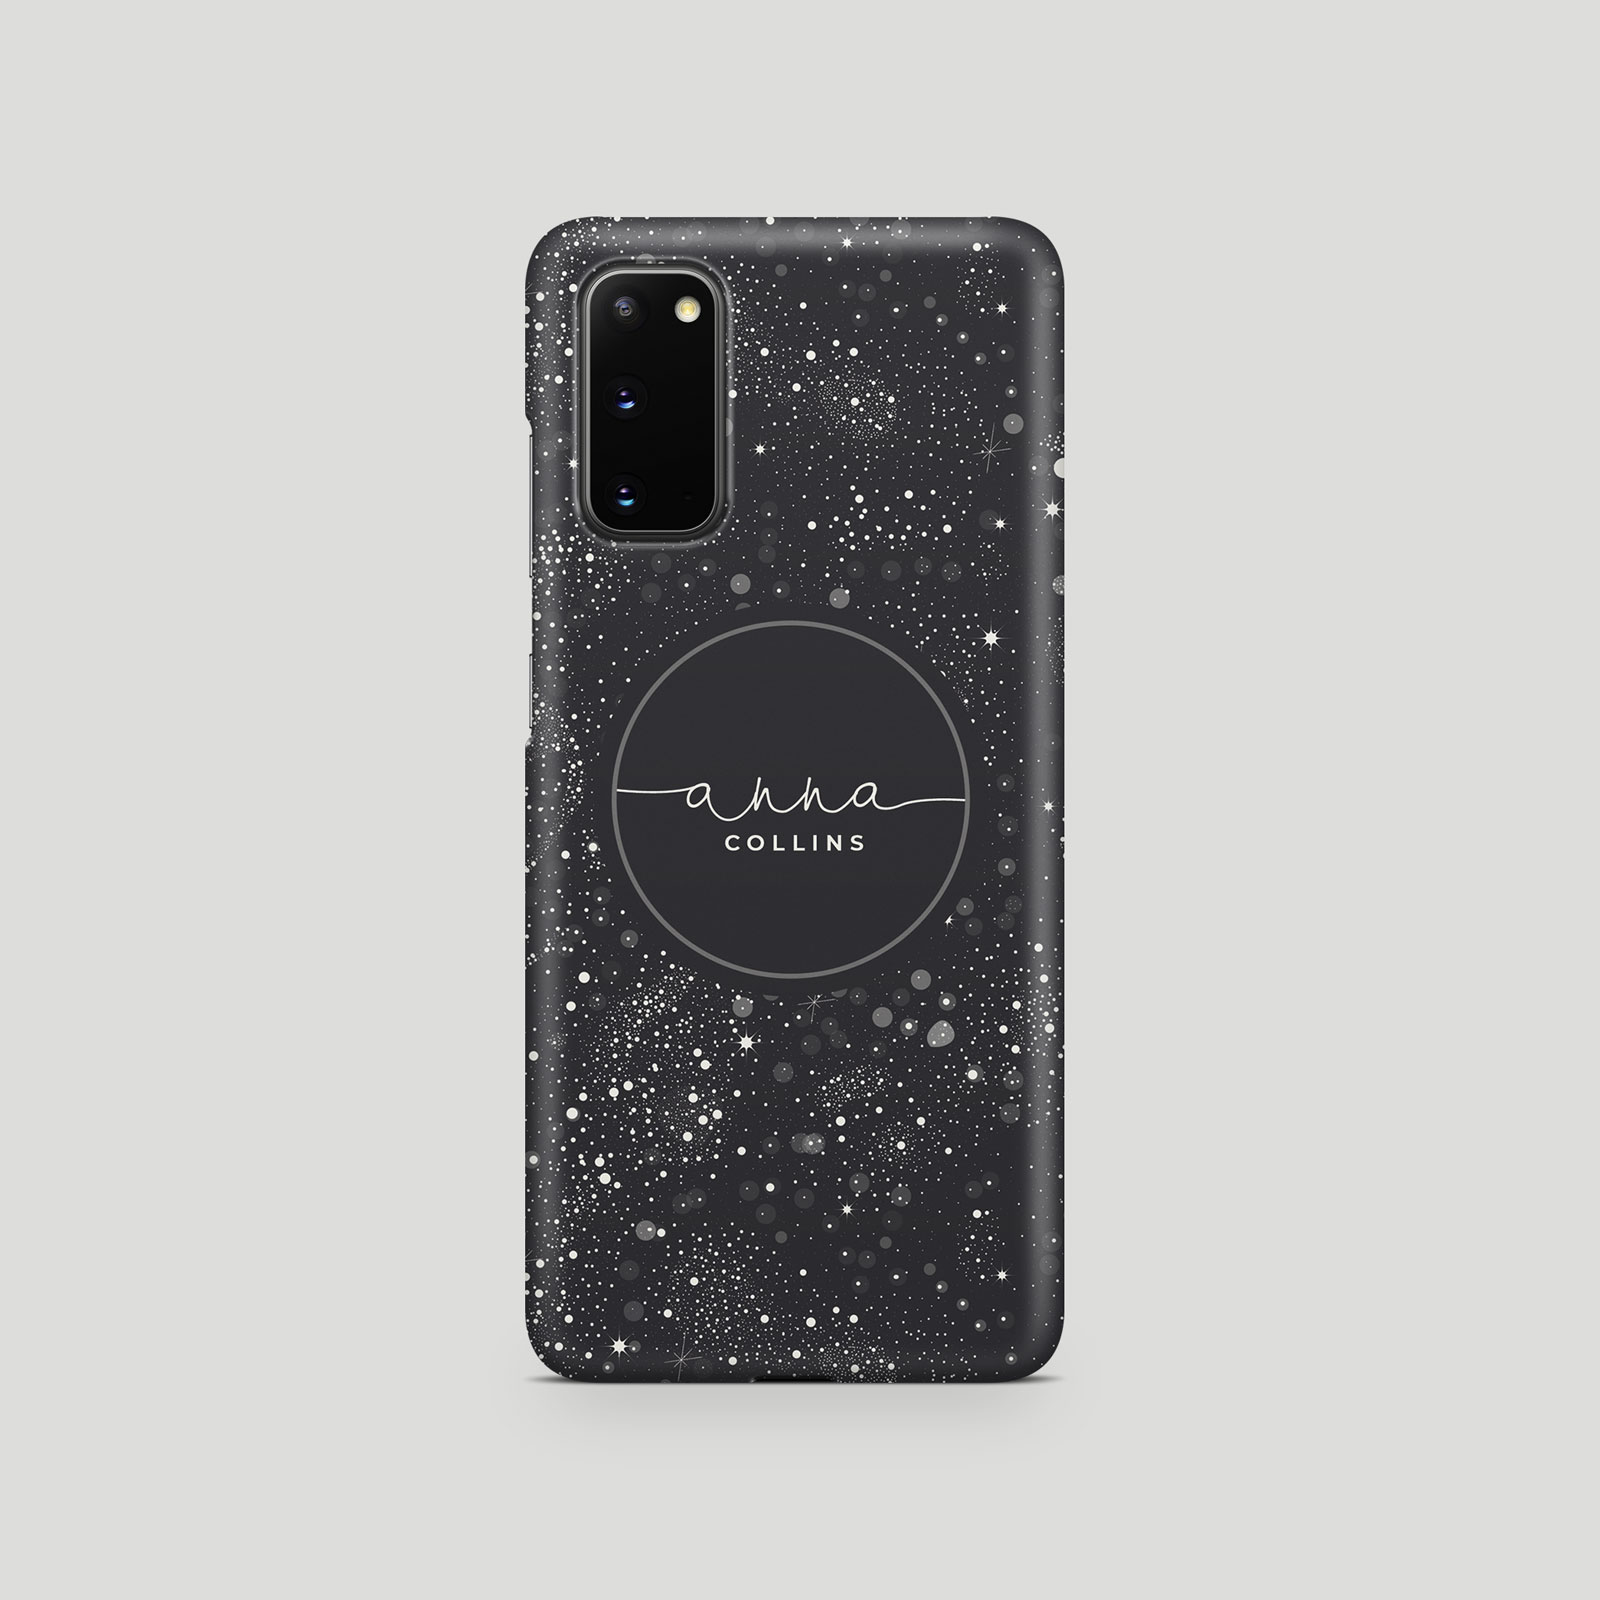 Tirita Personalised teléfono caso para Samsung S20 S10 S9 S7 Galaxy Moon Stars espacio